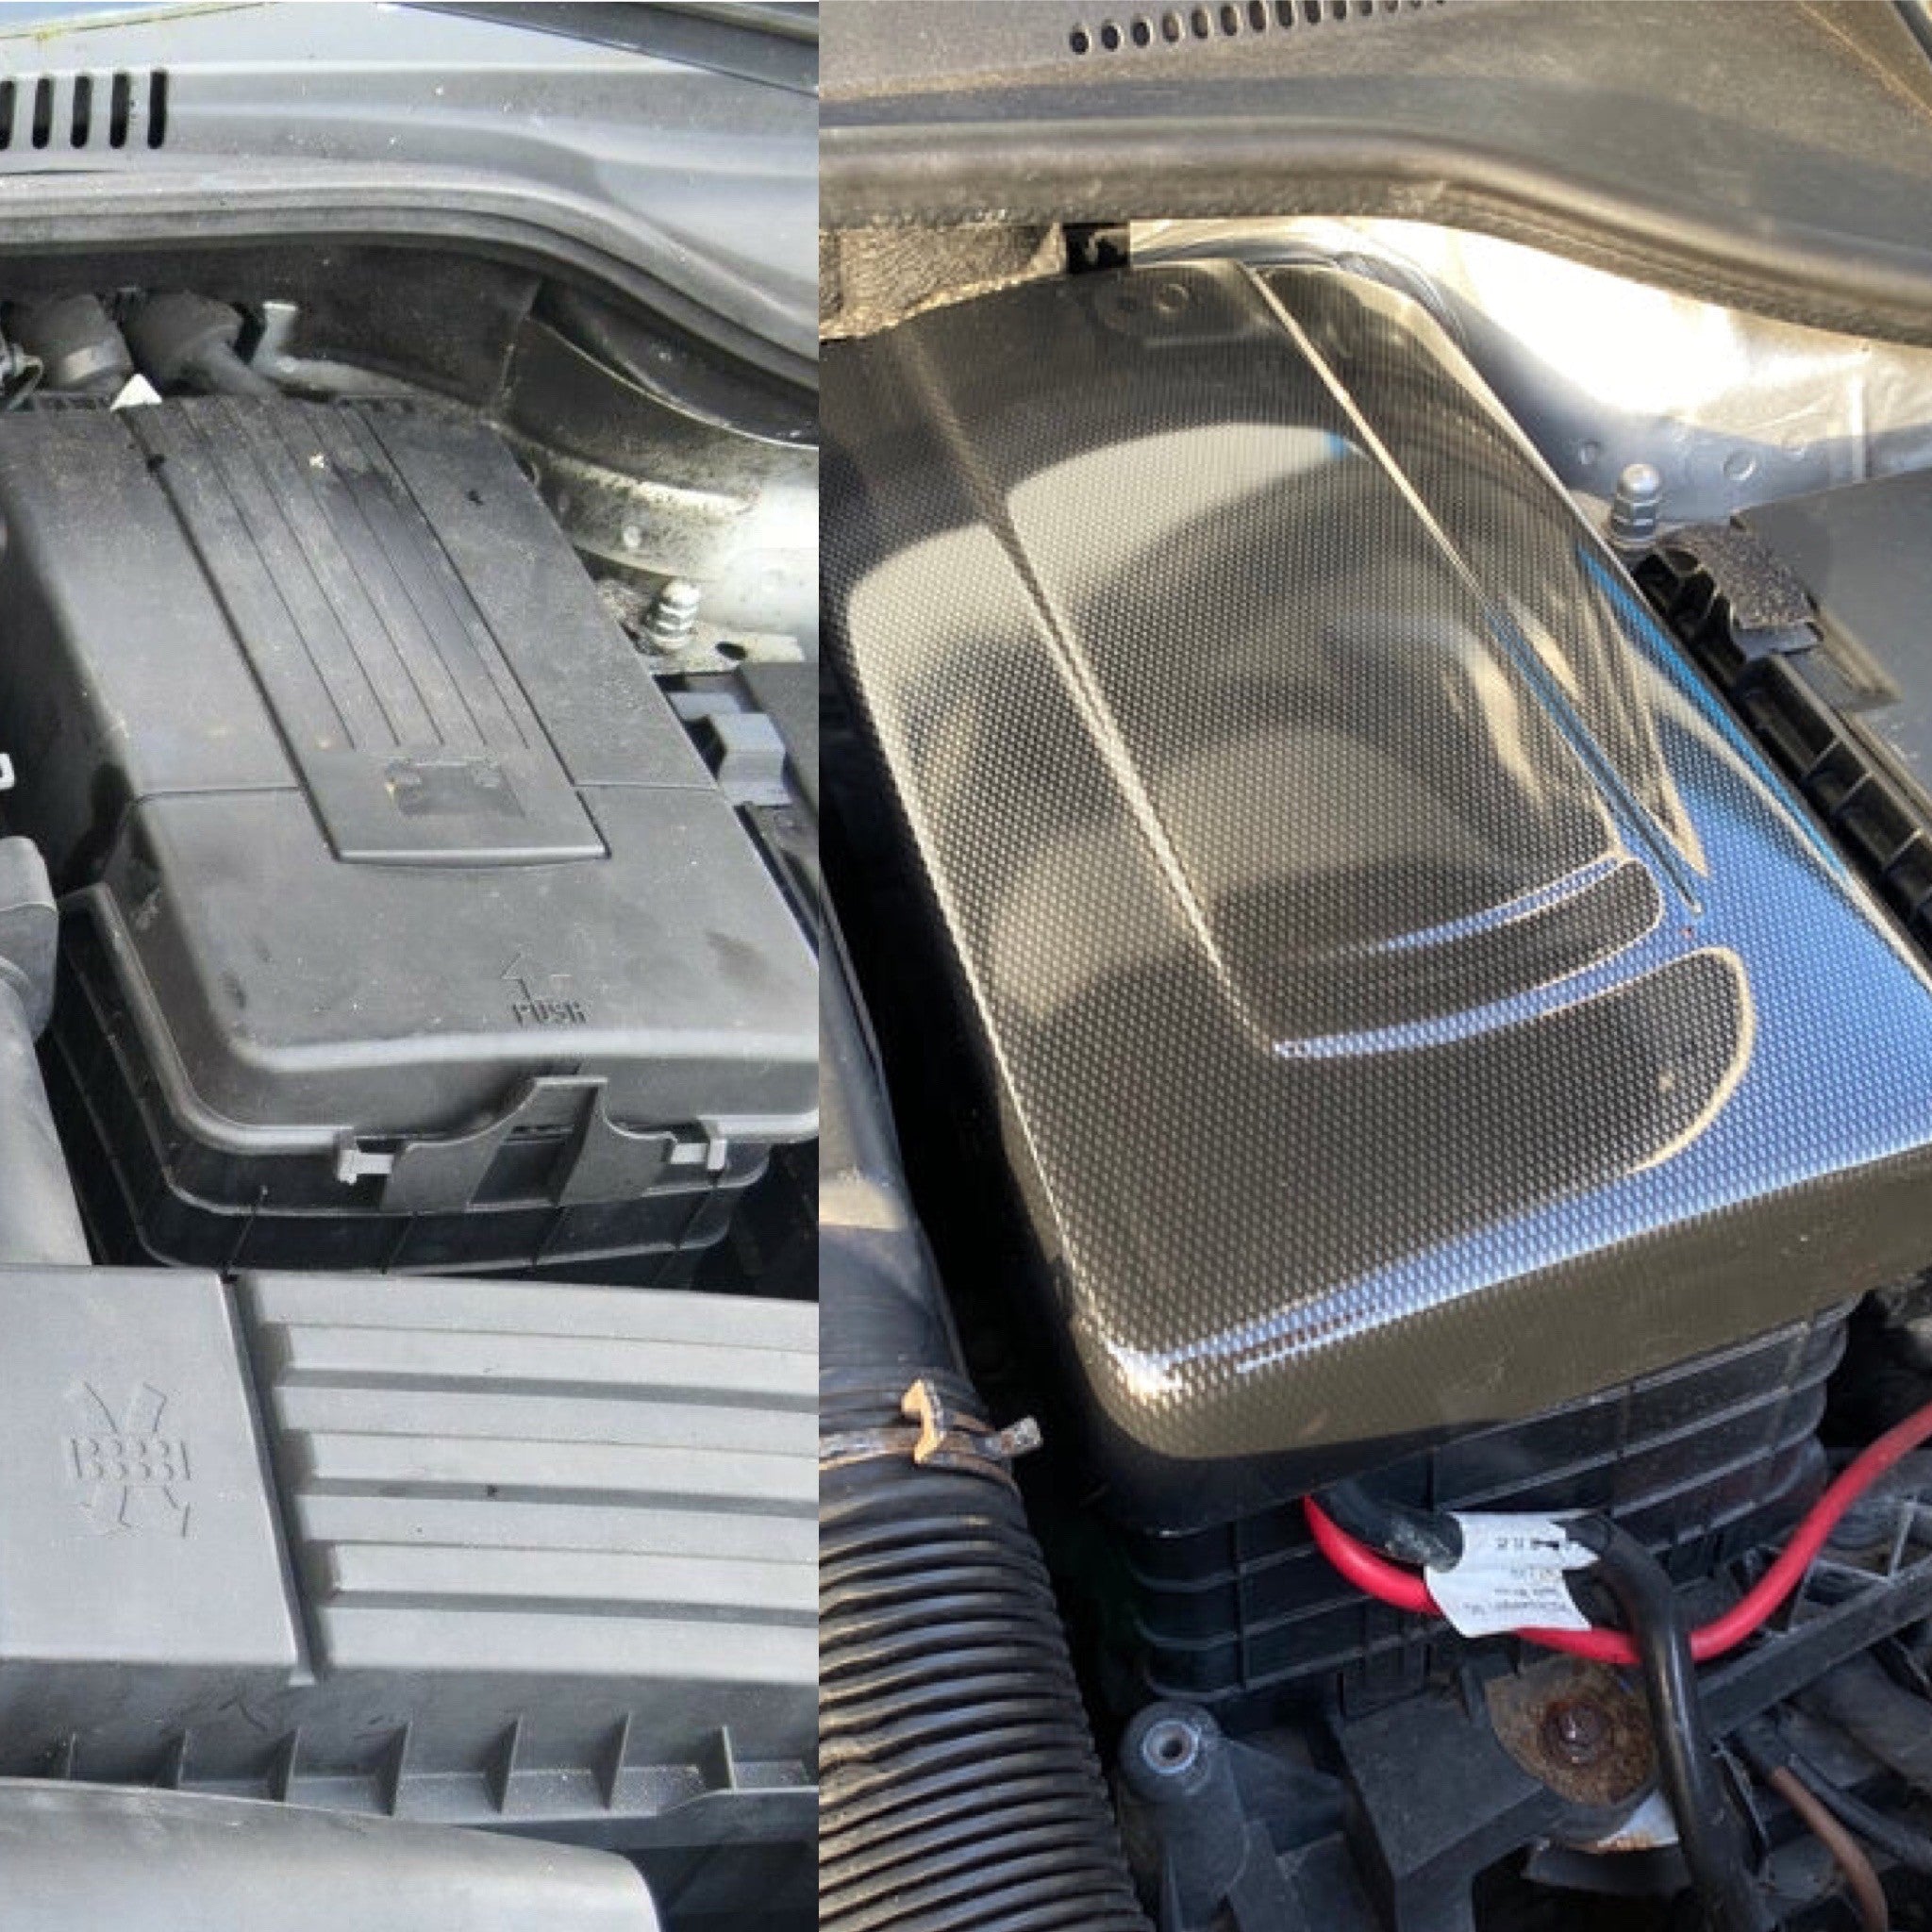 Proform Engine Bay Dress Up Kit - Mk5 Volkswagen Golf (Plastic Finishes)